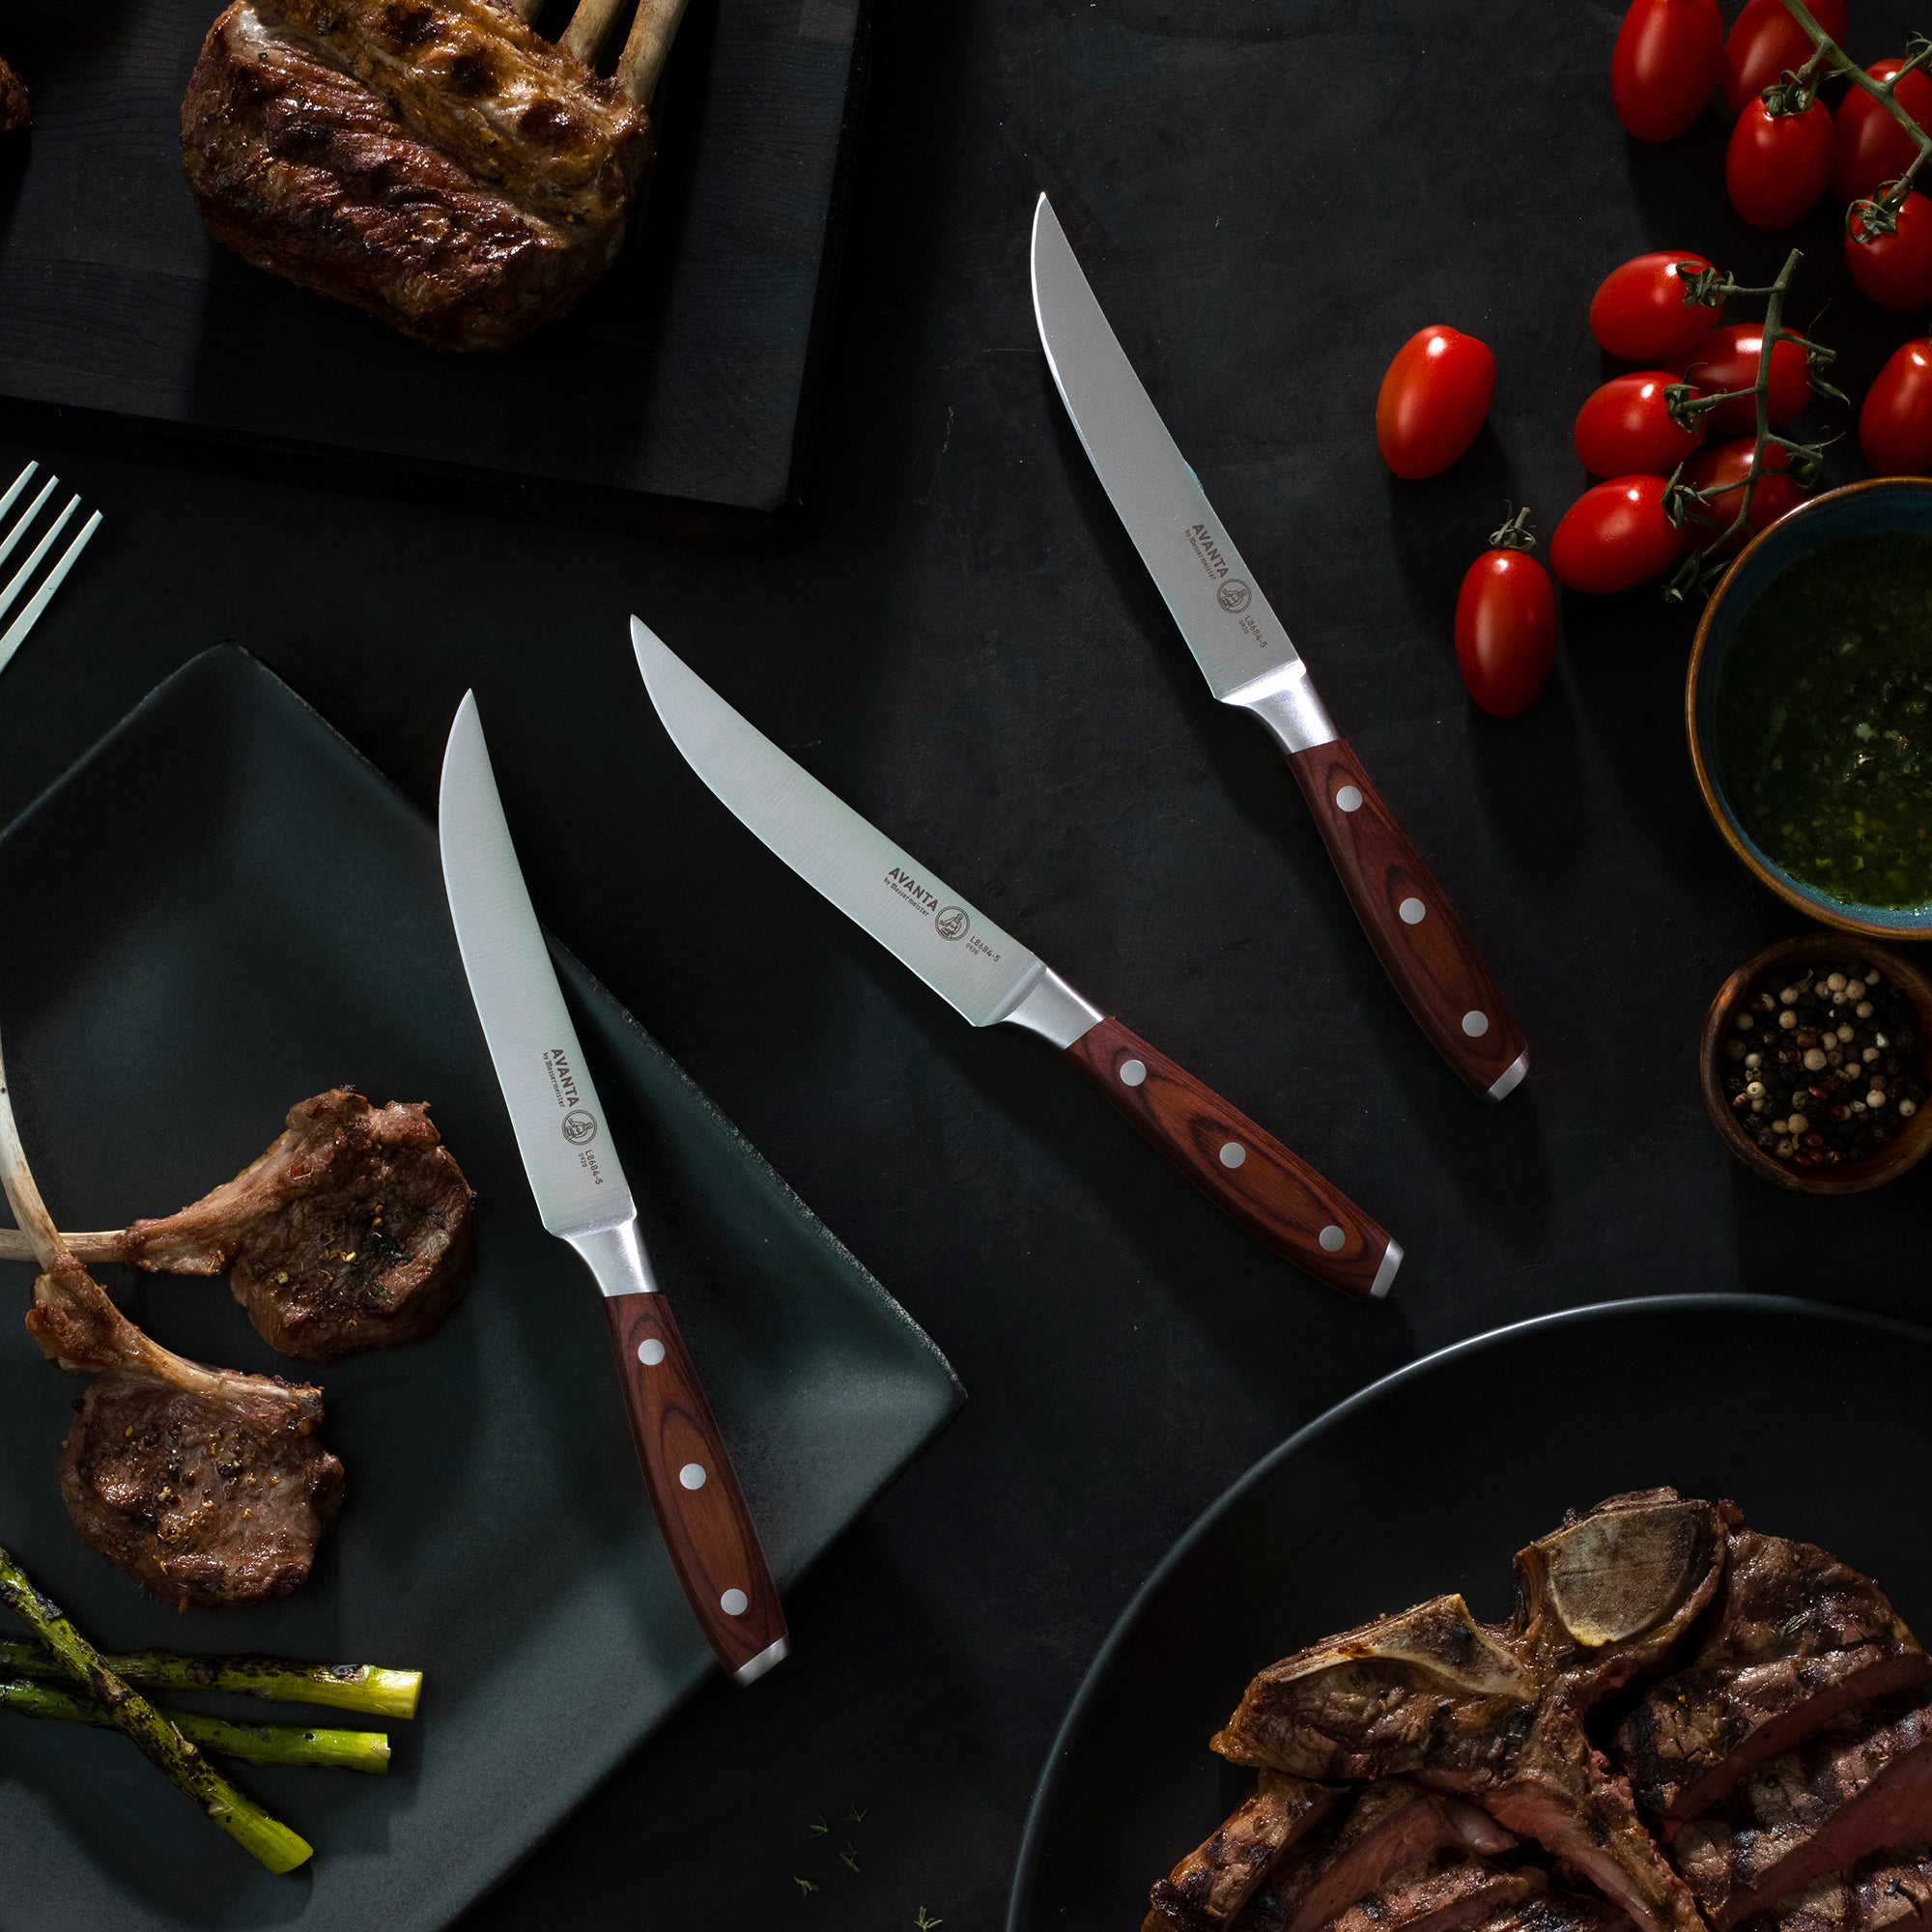 Home Hero Steak Knives Set of 8 - Steak Knife Set - Serrated Steak Knives  Dishwasher Safe Steak Knives - Stainless Steak Knives Serrated - Dinner  Knives - Stainless Steel Blades 